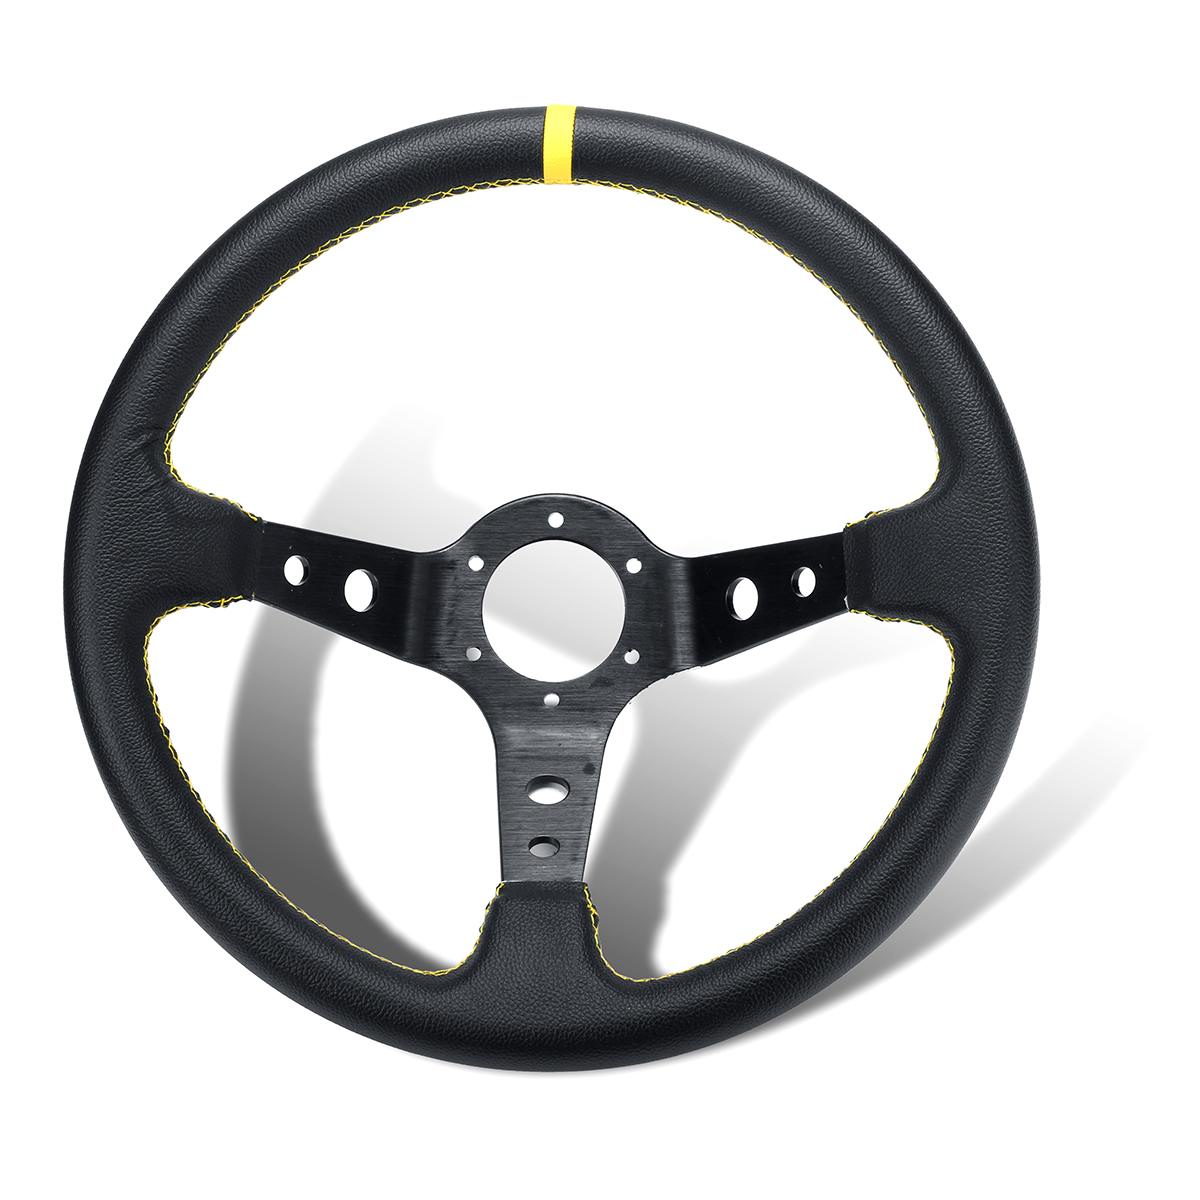 14inch 350mm Universal Car Racing Steering Wheel A...